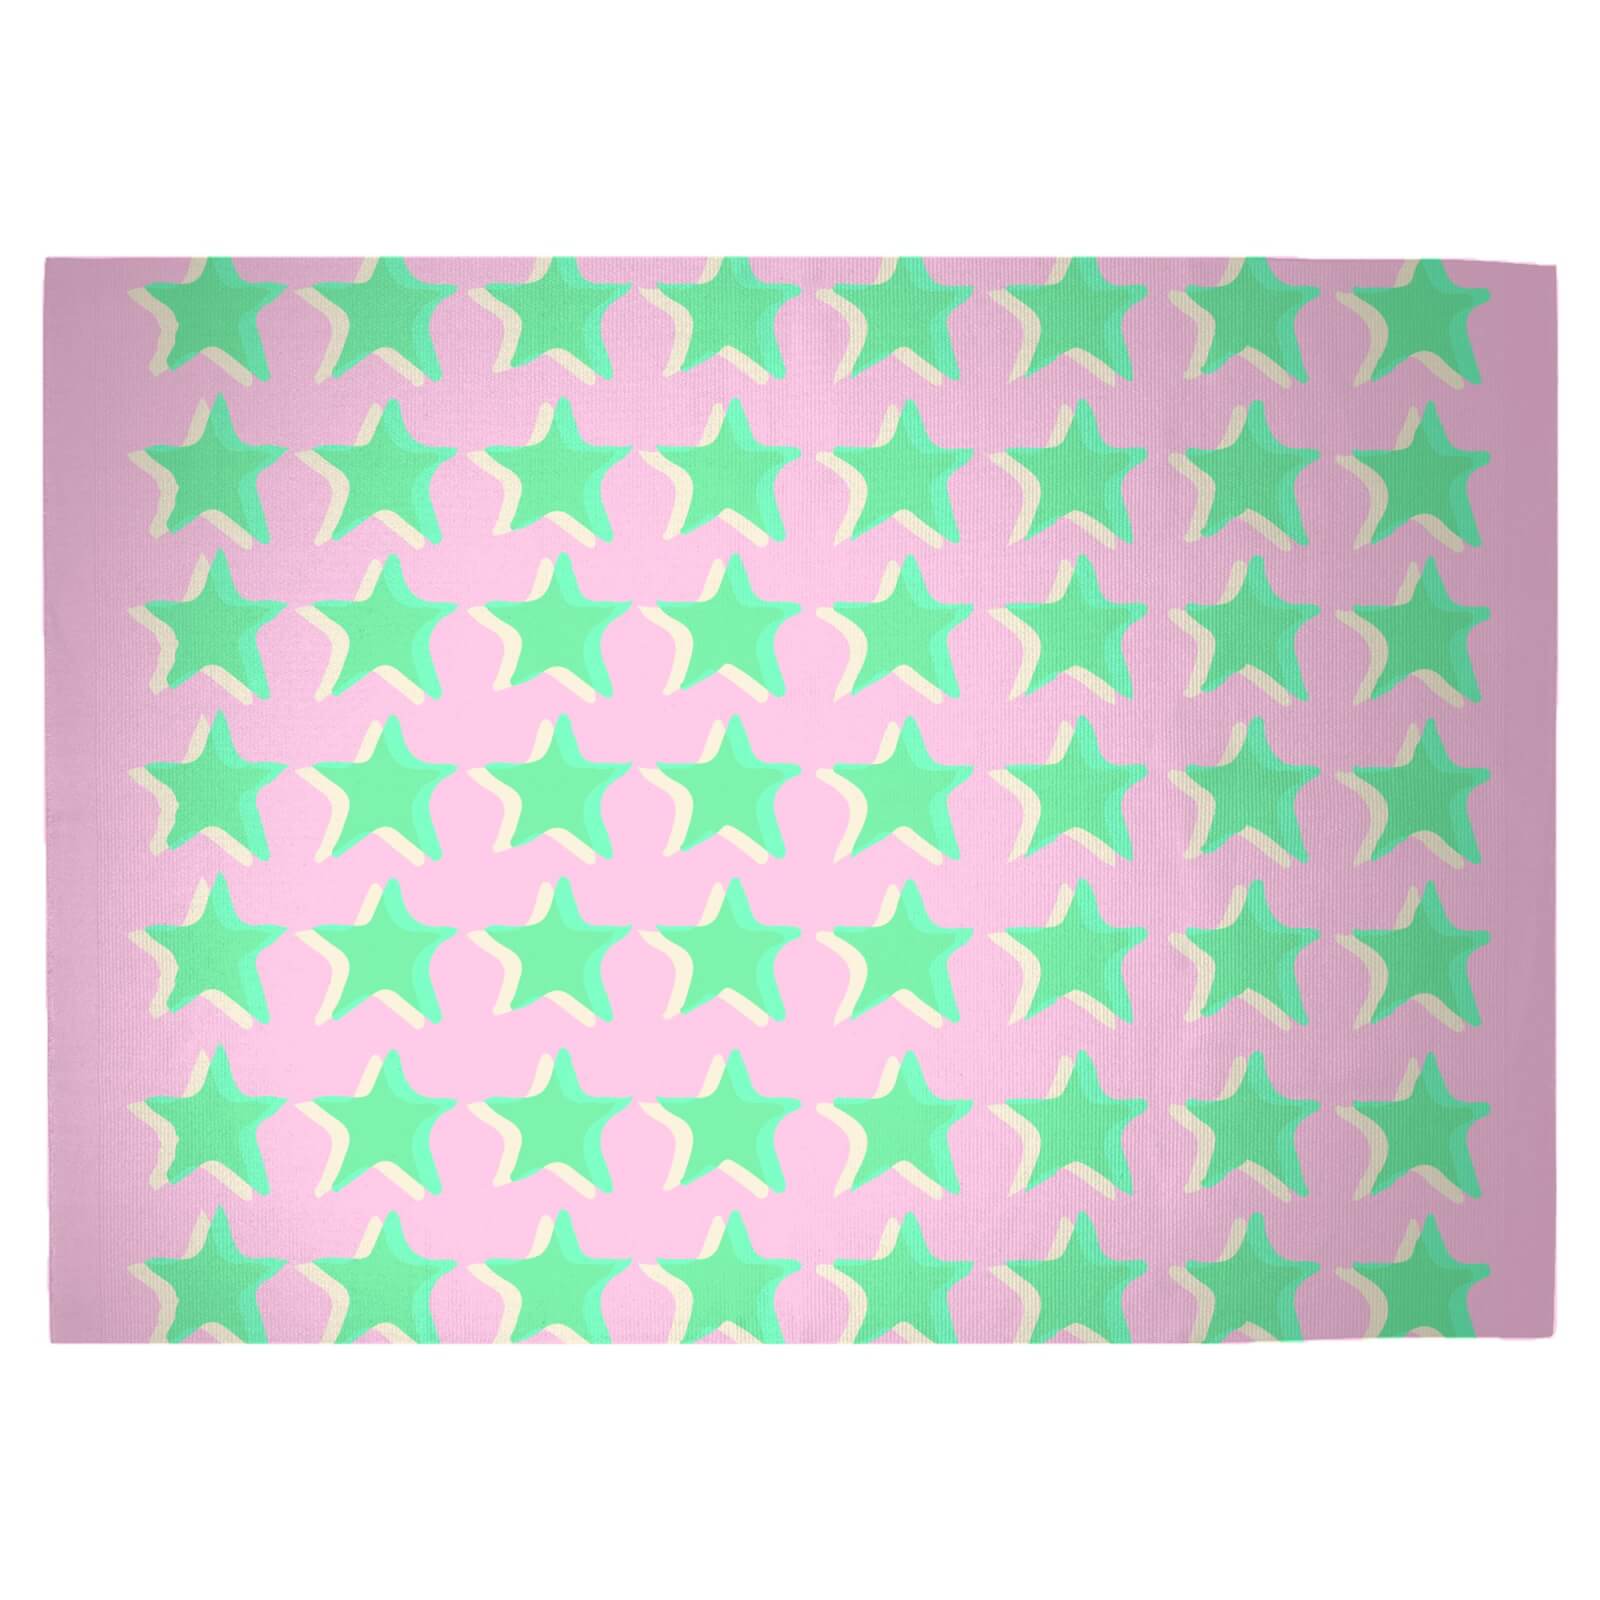 Riso Print Stars Woven Rug - Large